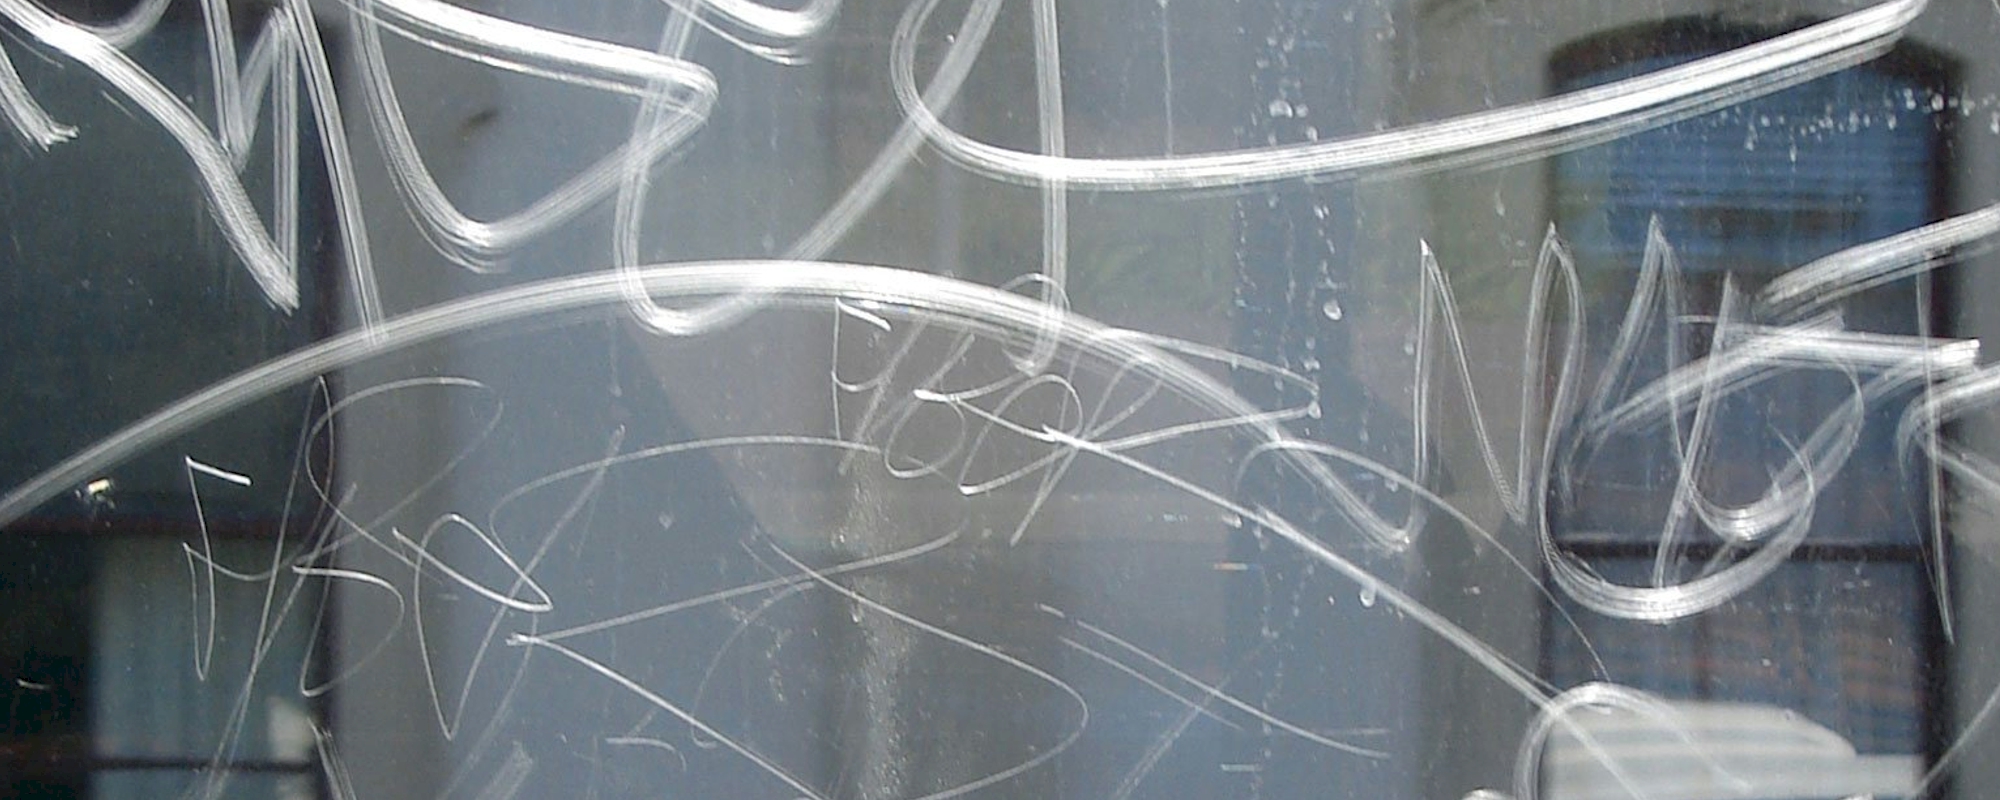 Eliminación de arañazos en cristales o escaparates